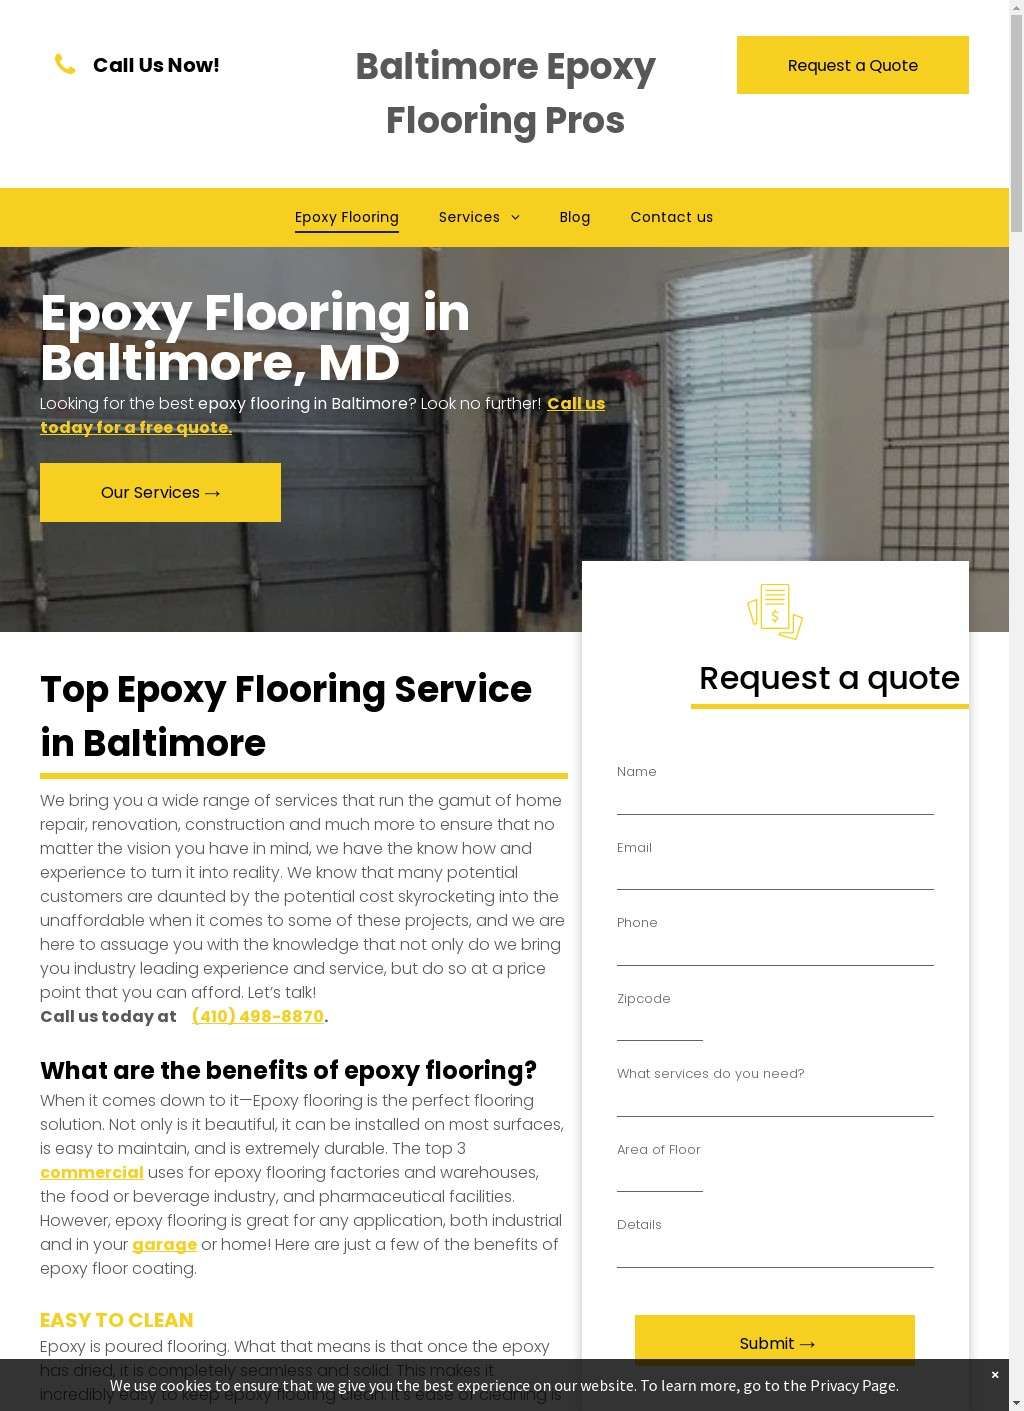 Baltimore Epoxy Flooring Pros